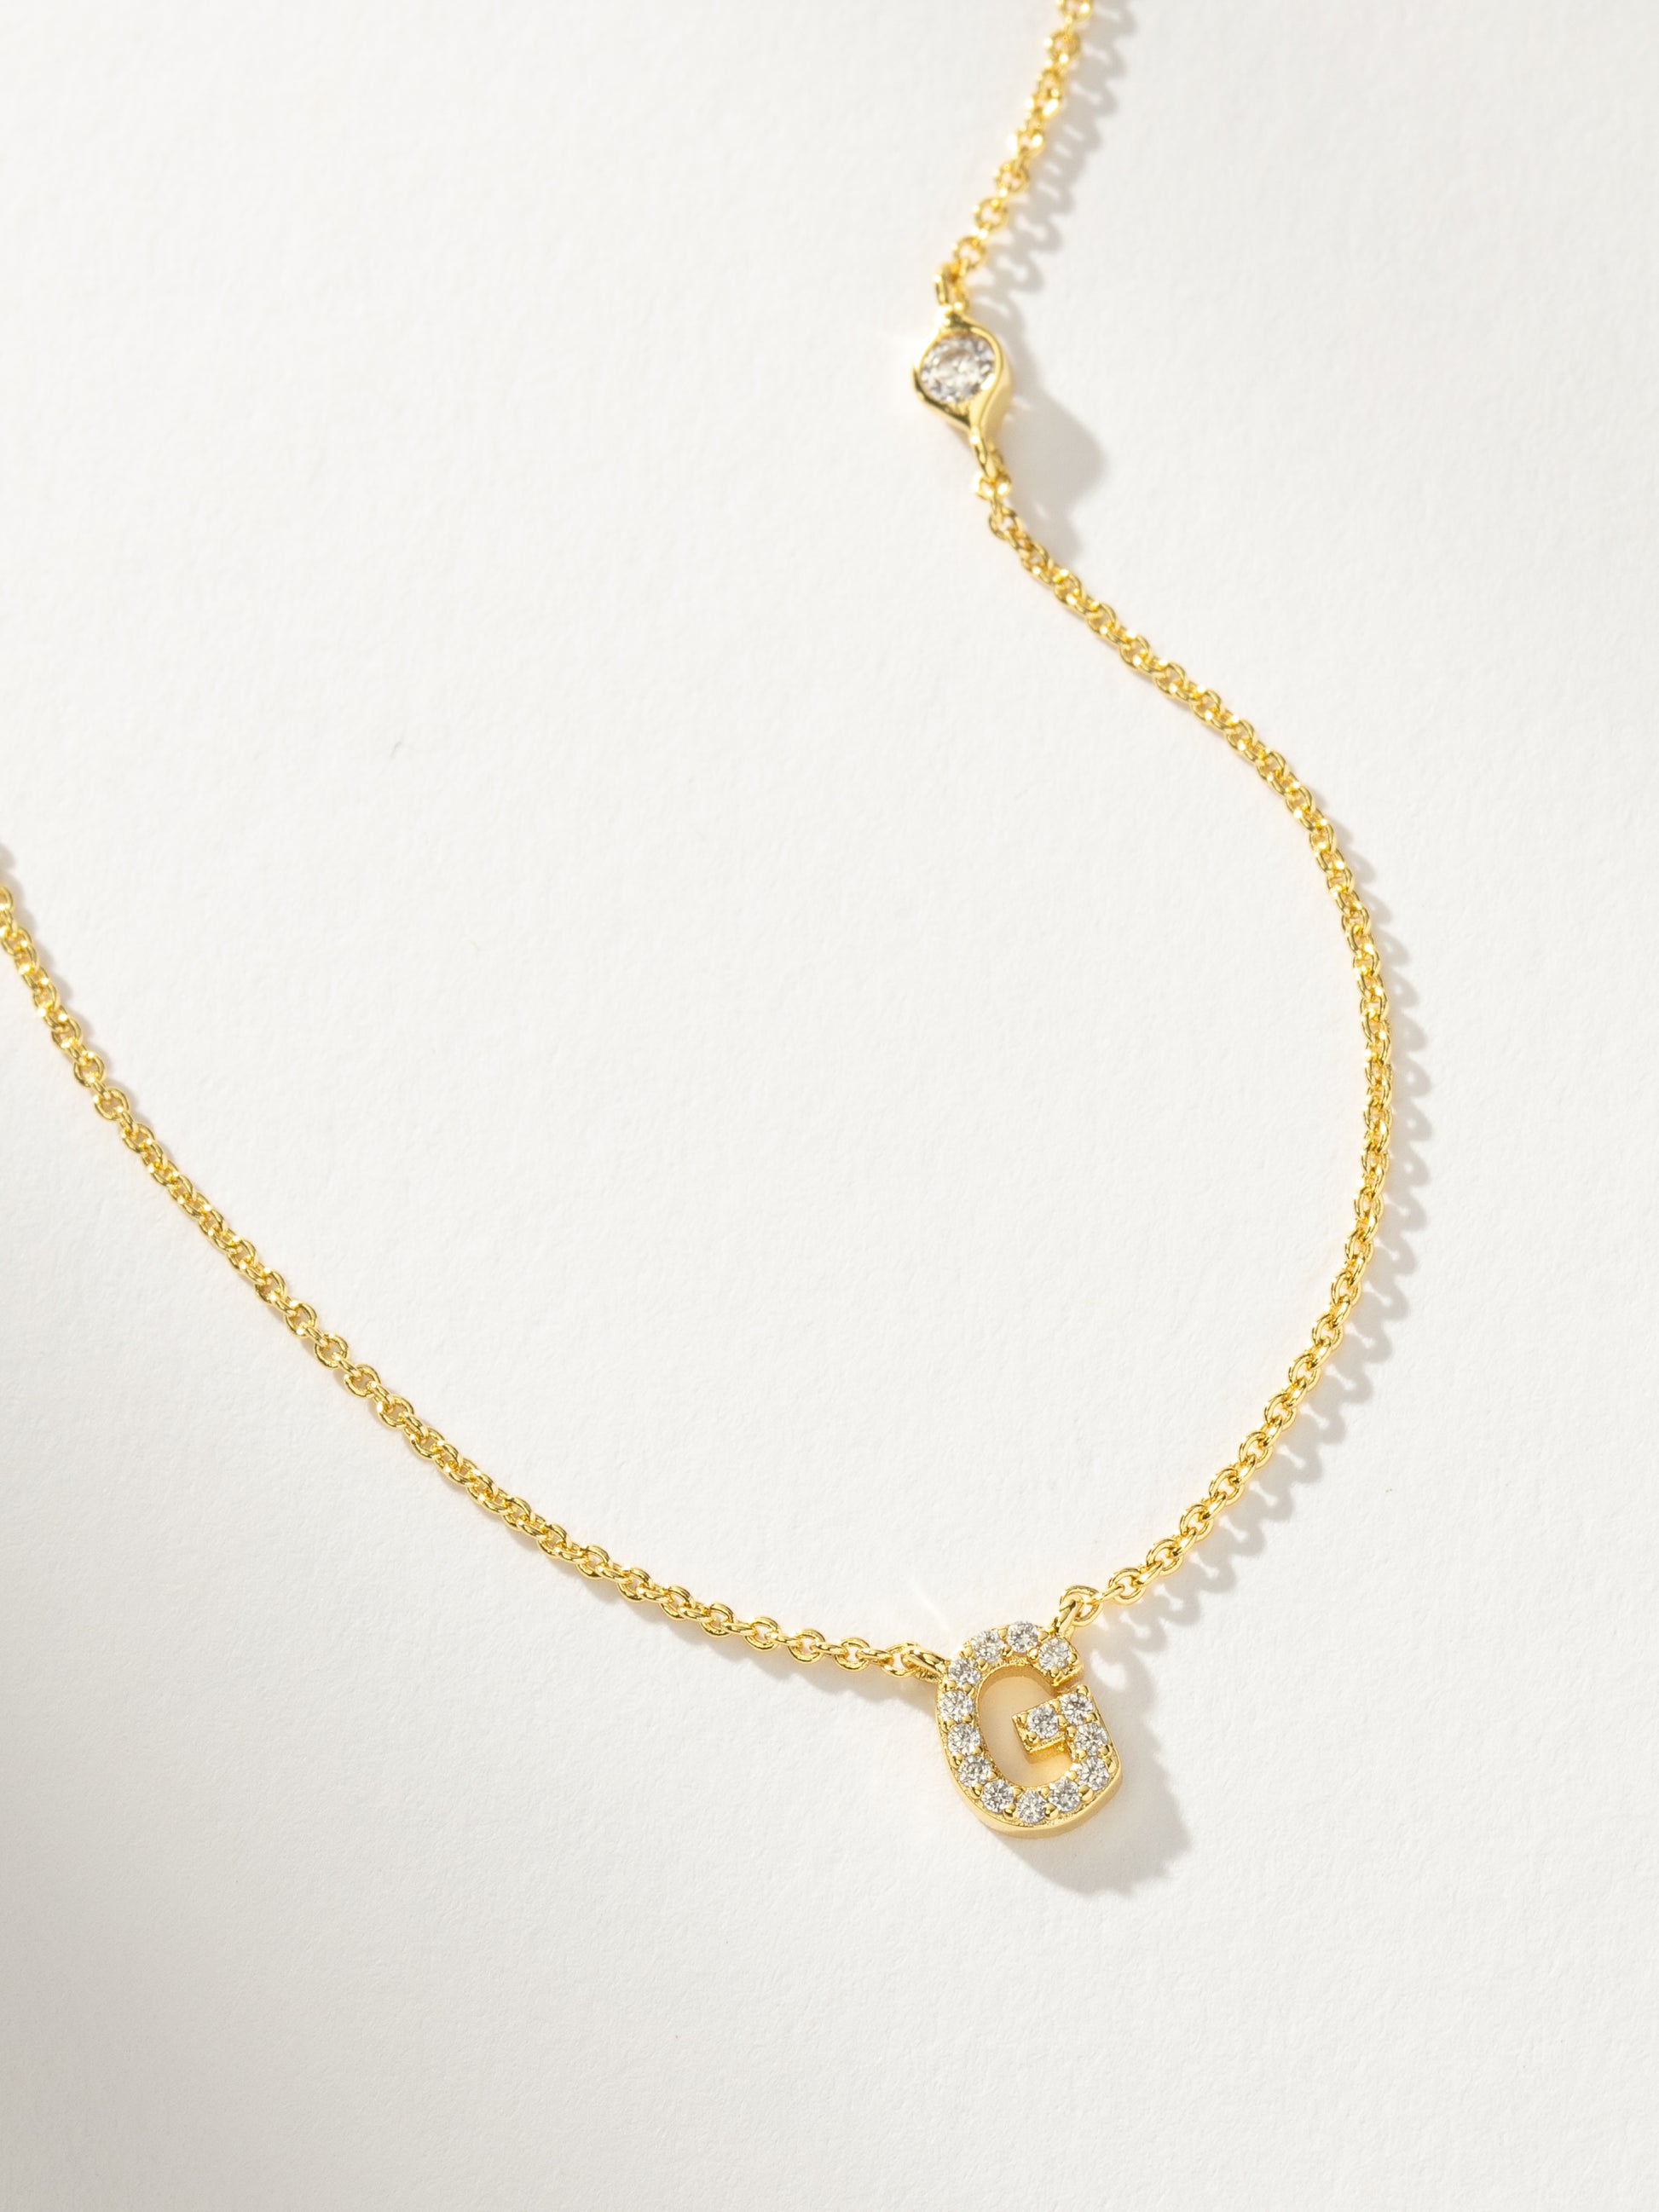 Pavé Initial Necklace | Gold G | Product Detail Image | Uncommon James